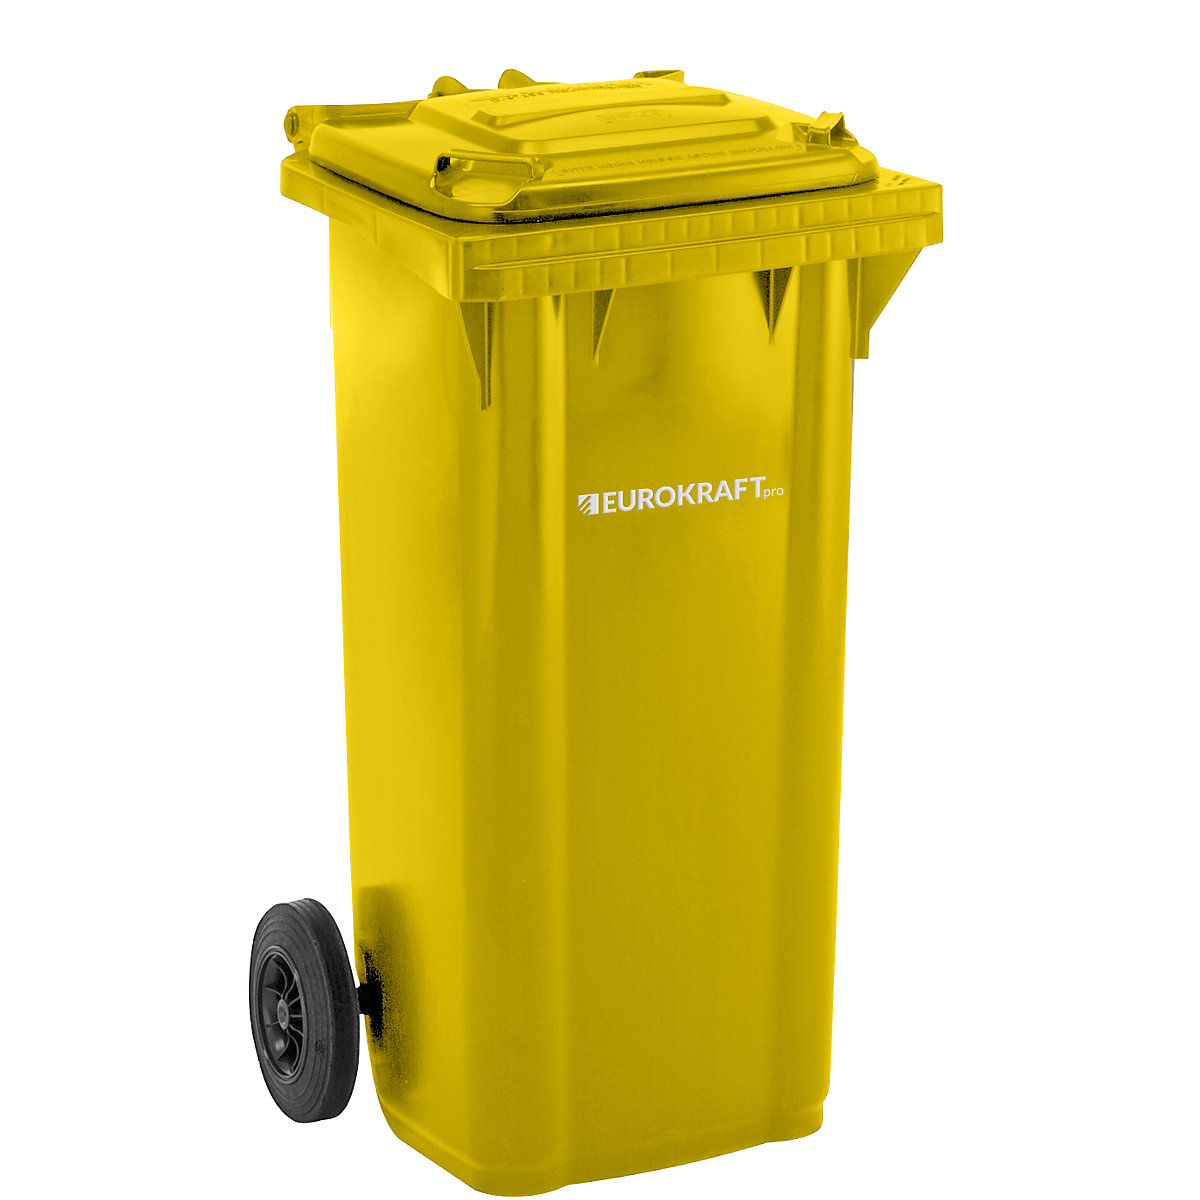 Pubelă de gunoi din plastic DIN EN 840 – eurokraft pro, volum 120 l, lăț. x î. x ad. 505 x 1005 x 555 mm, galben, minimum 5 buc.-3